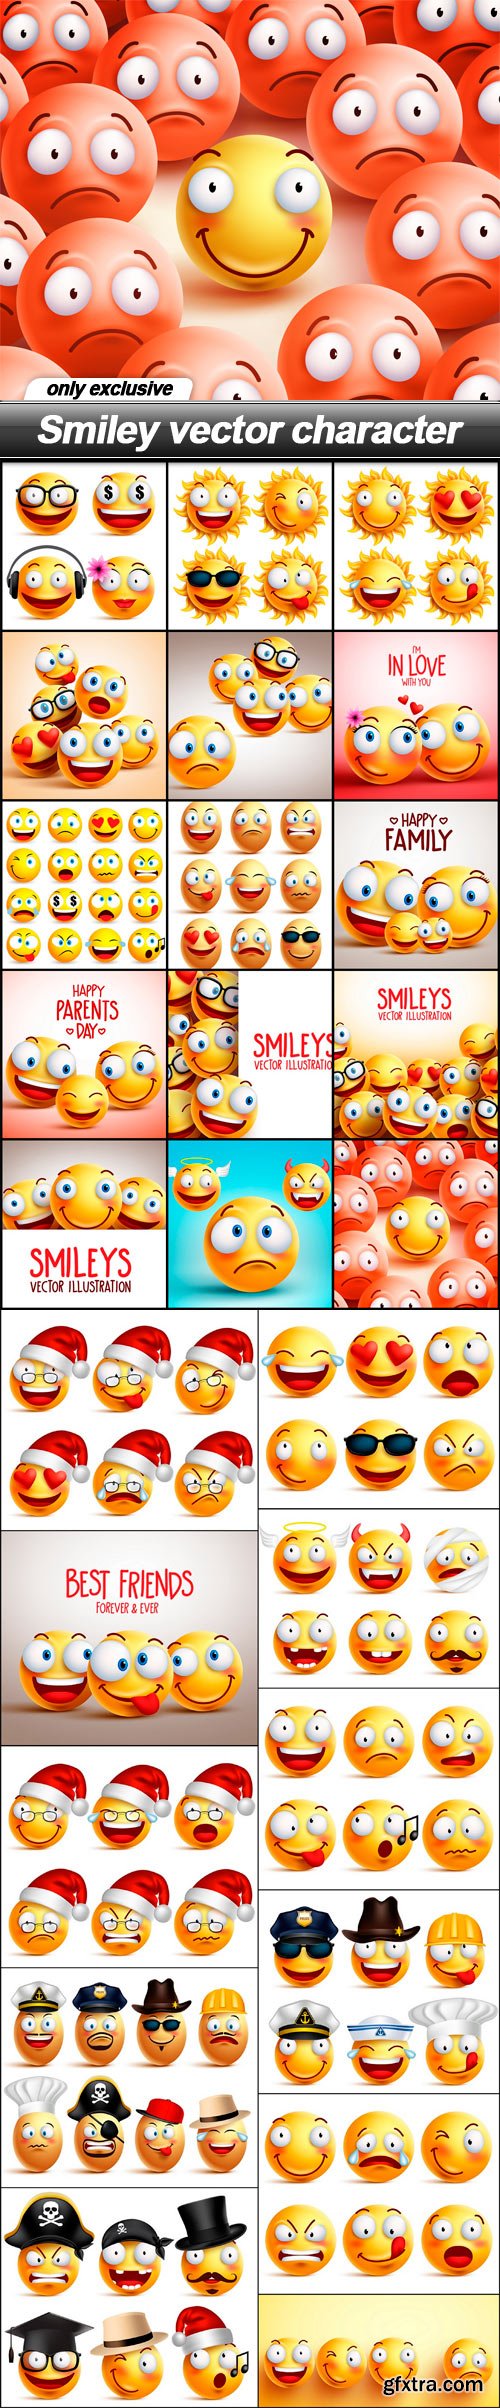 Smiley vector character - 26 EPS